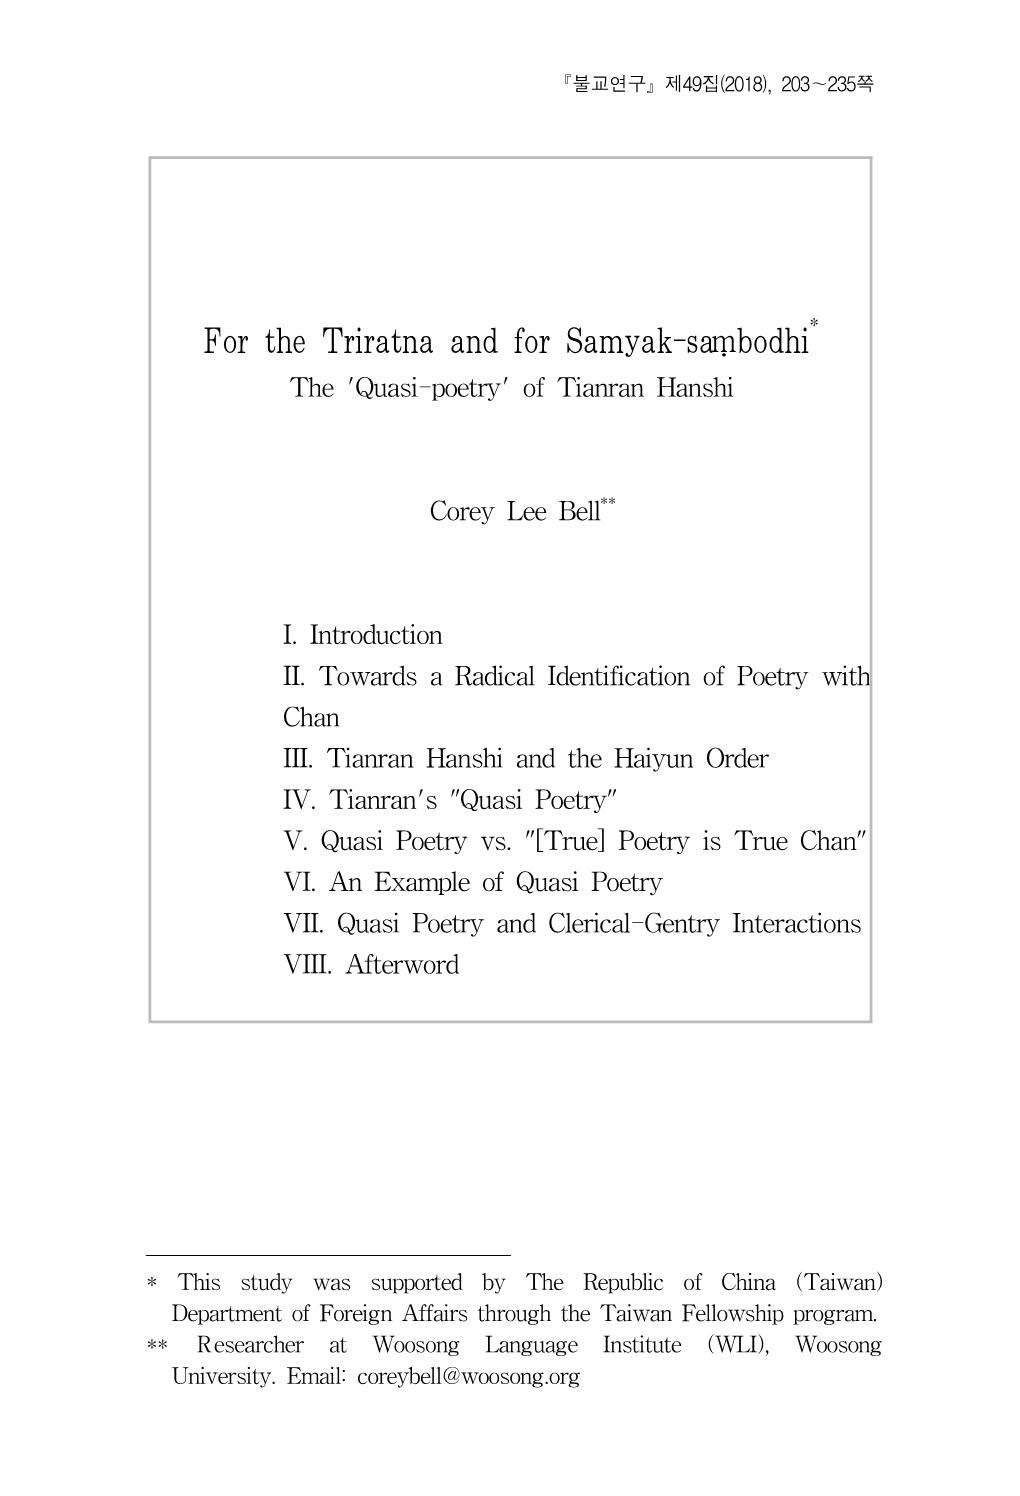 For the Triratna and for Samyak-Saṃbodhi* the 'Quasi-Poetry' of Tianran Hanshi